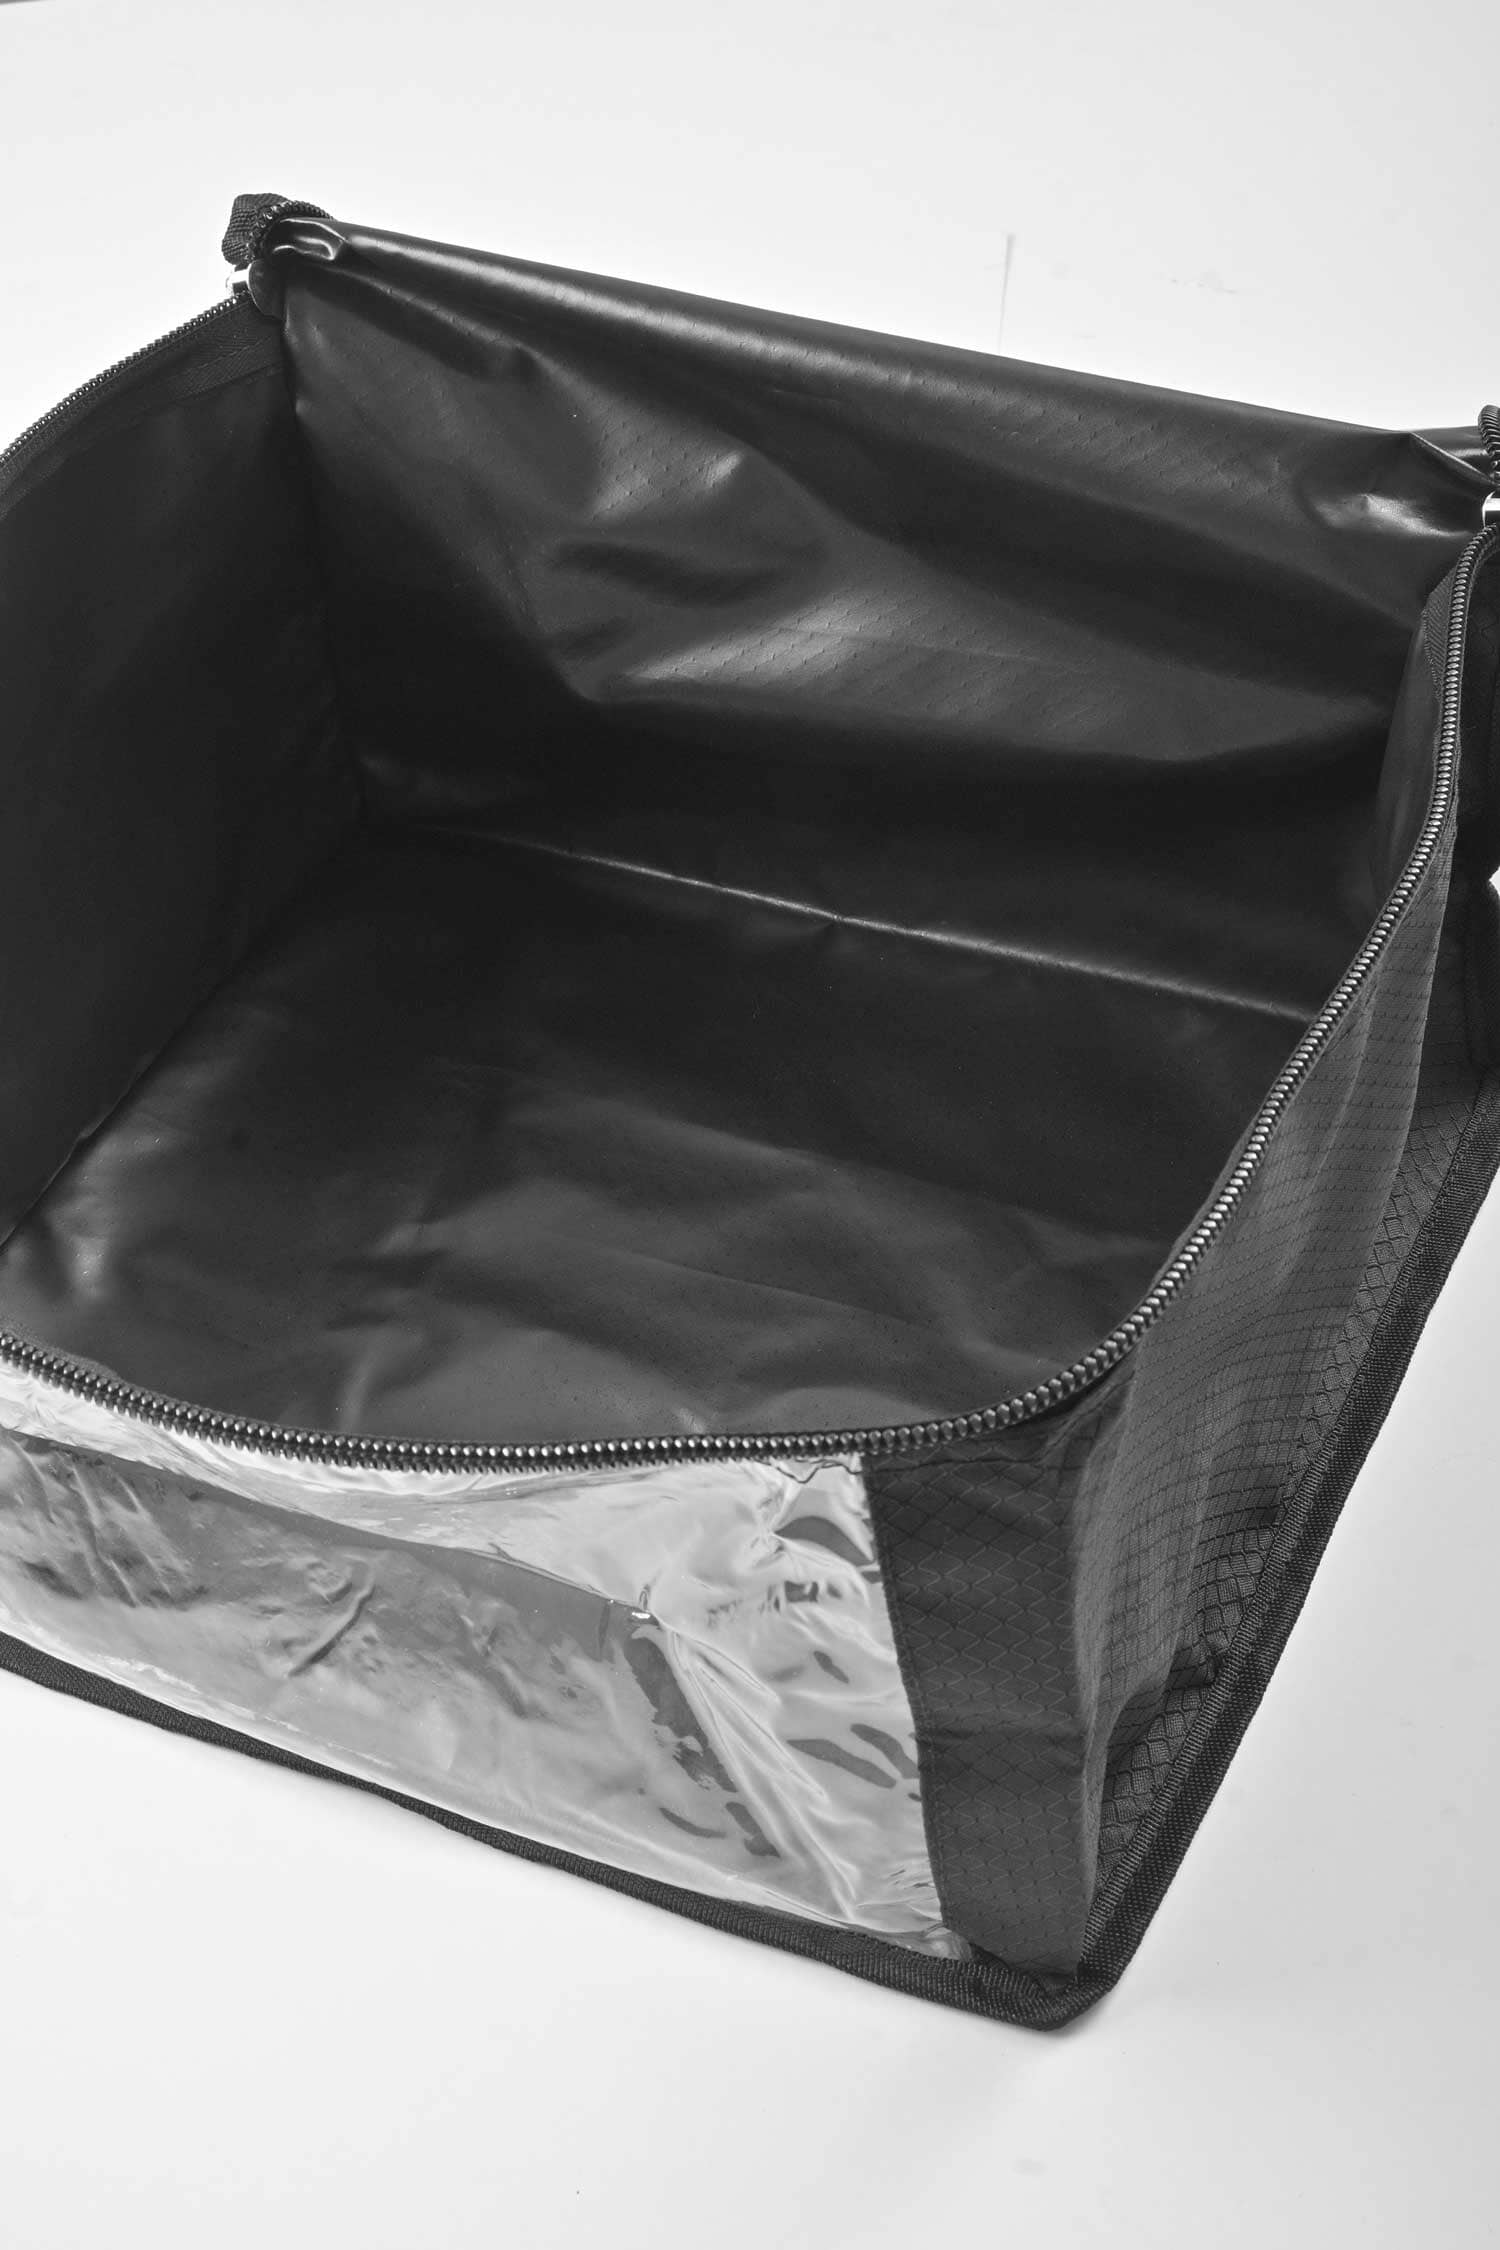 Tensport Home Storage Organizer Bag